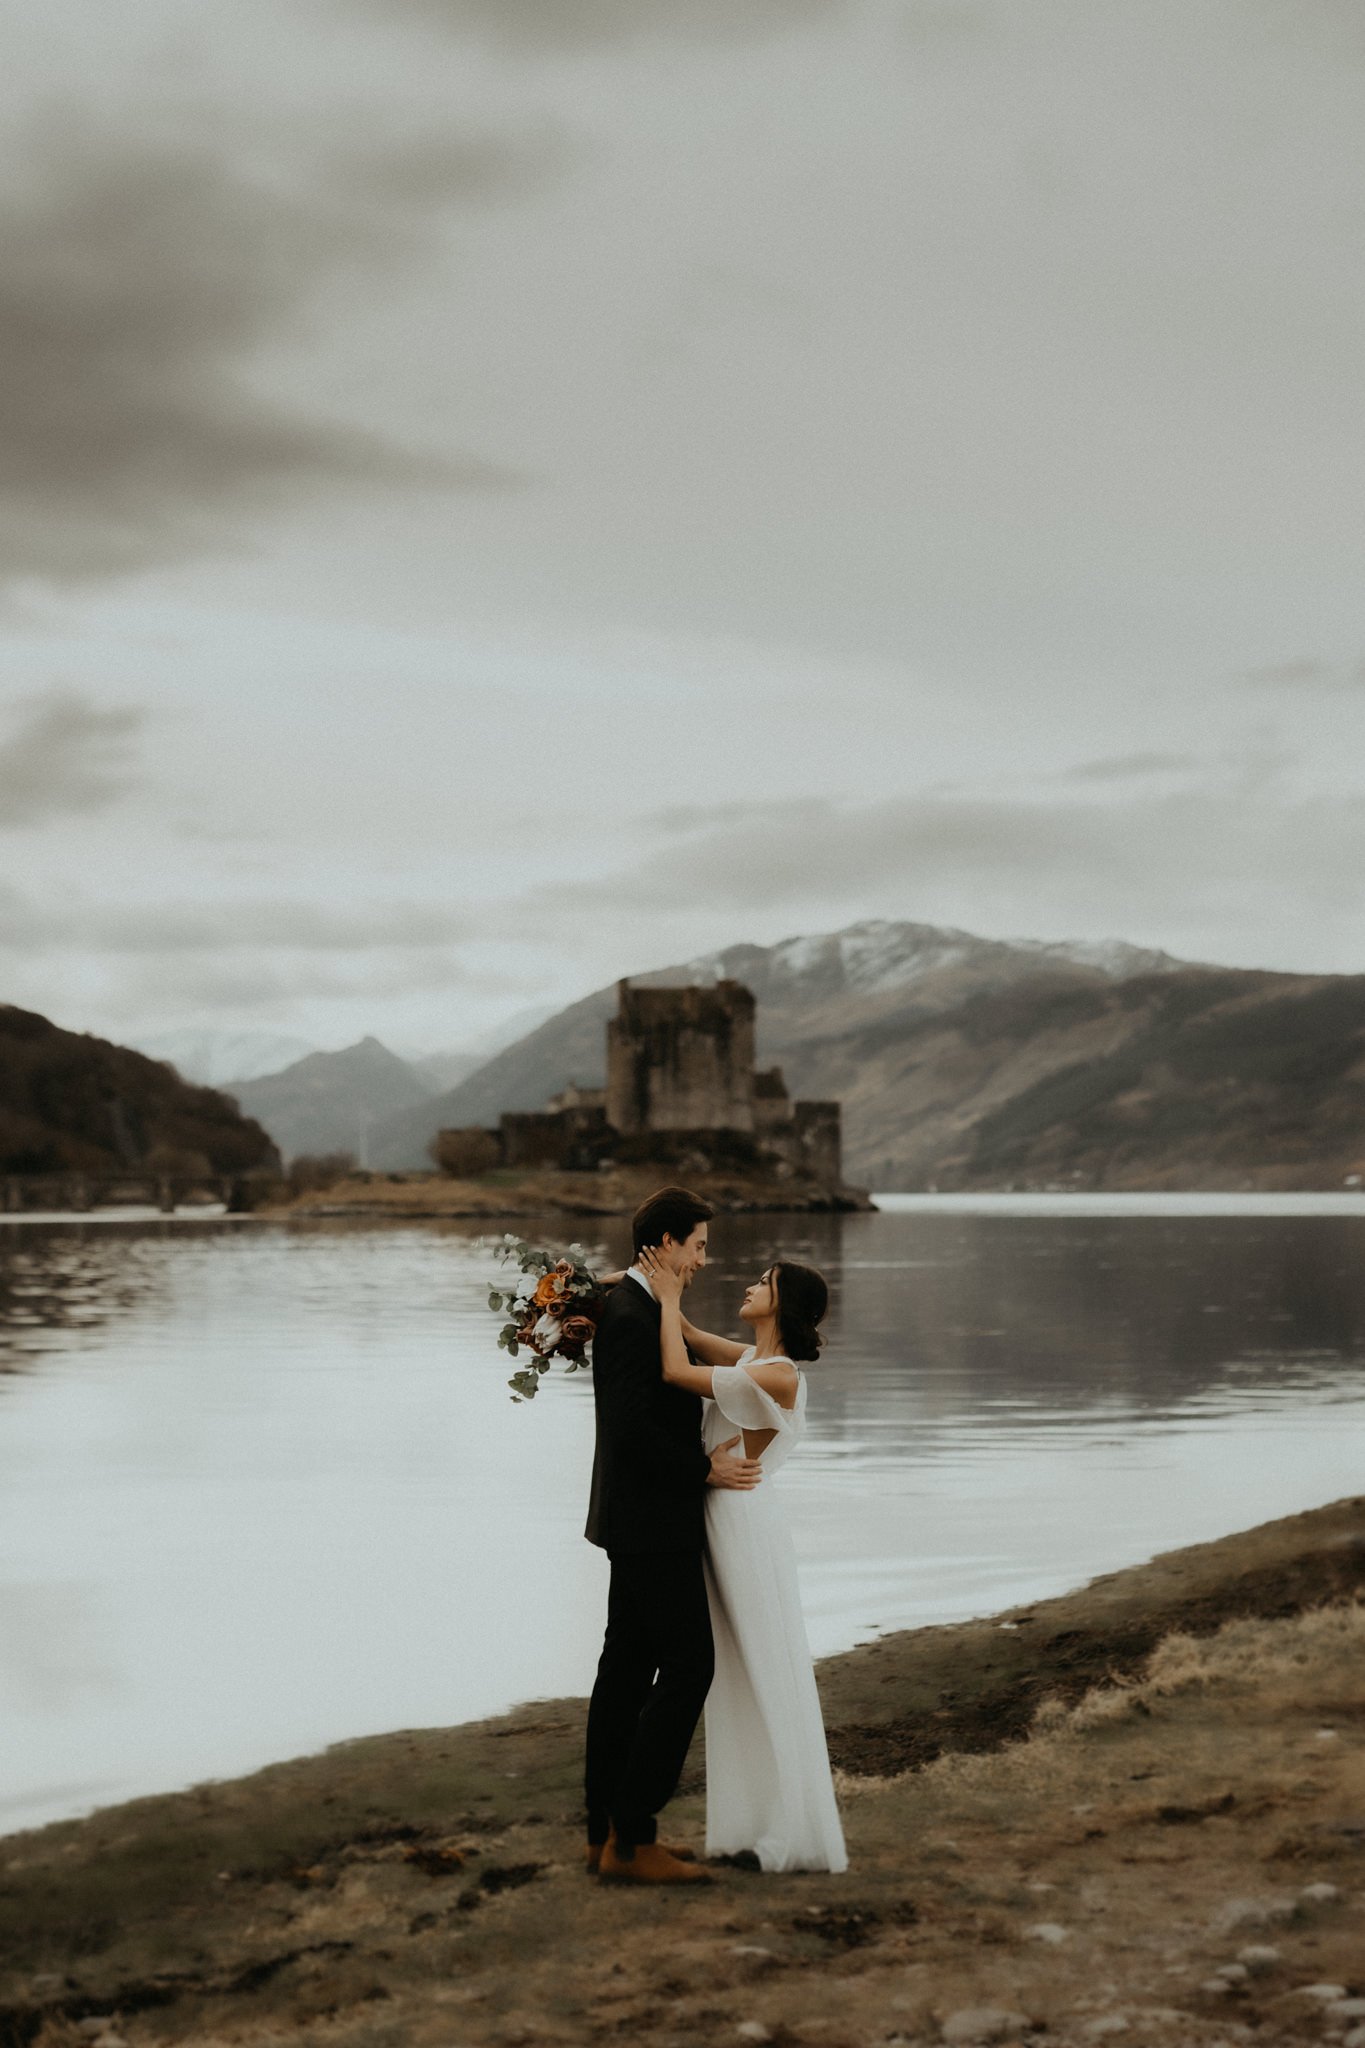 Isle of Skye elopement | Scotland Elopement | Scotland Elopement photos